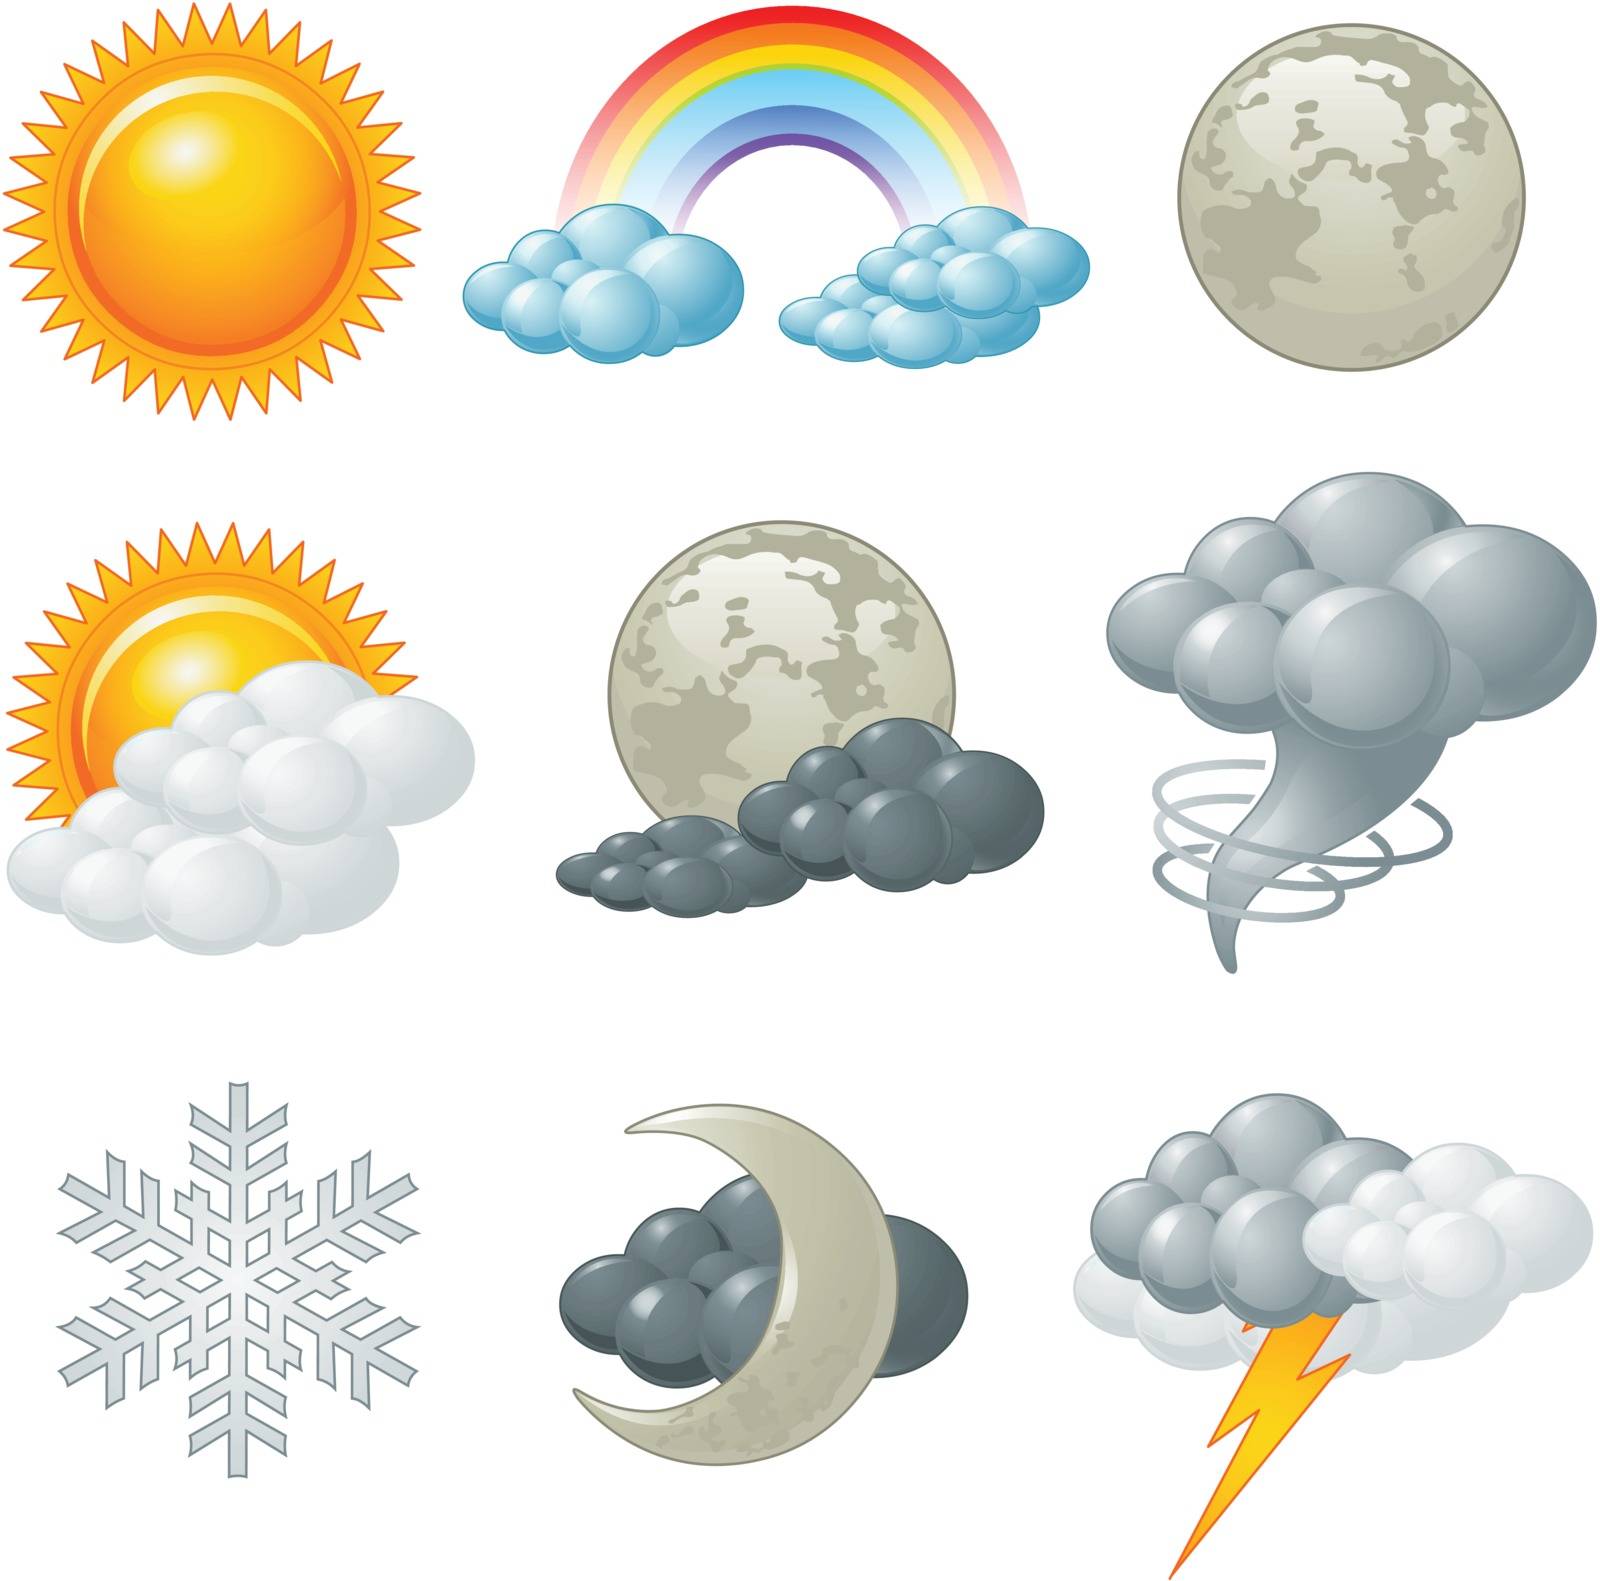 Nine weather related icons set